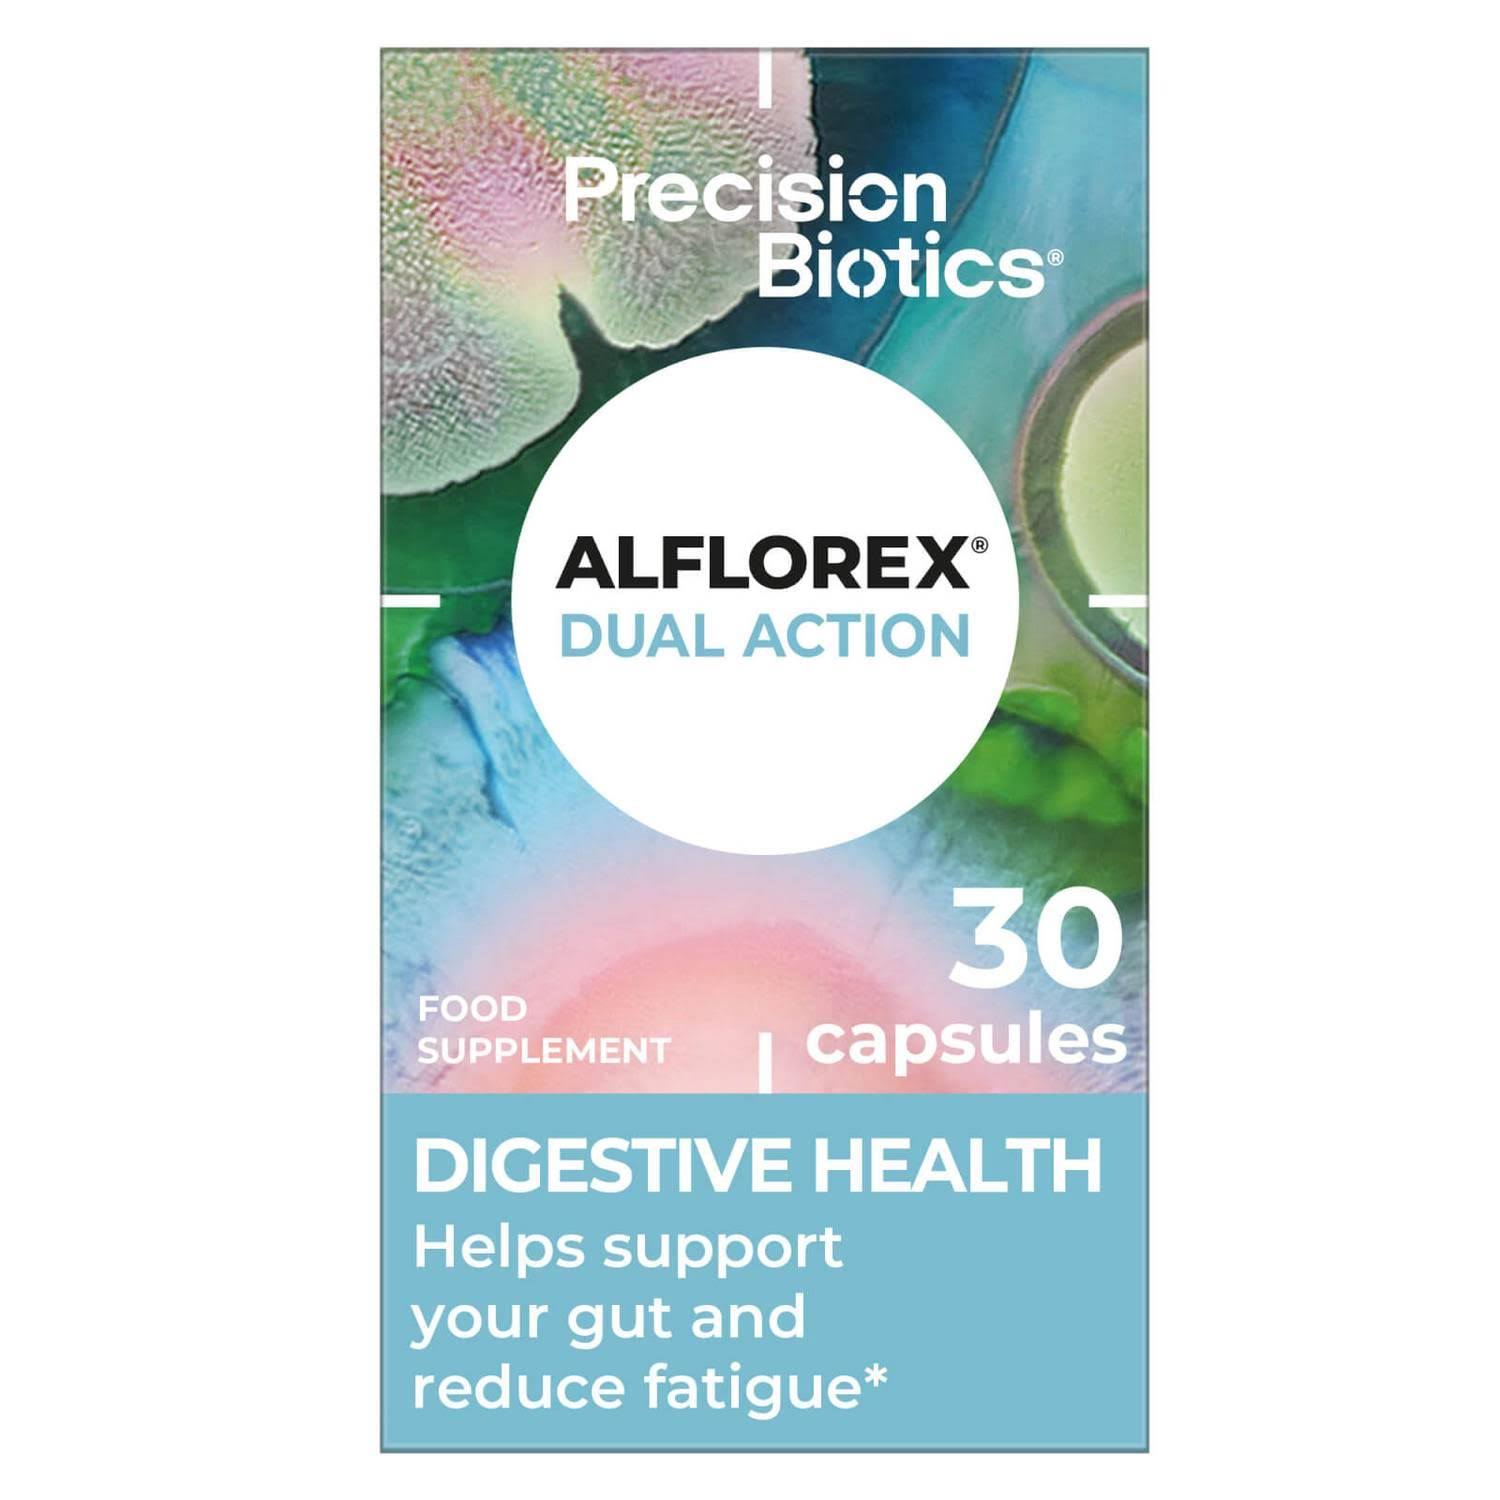 Alflorex Precisionbiotics 30 Chwable Tablets